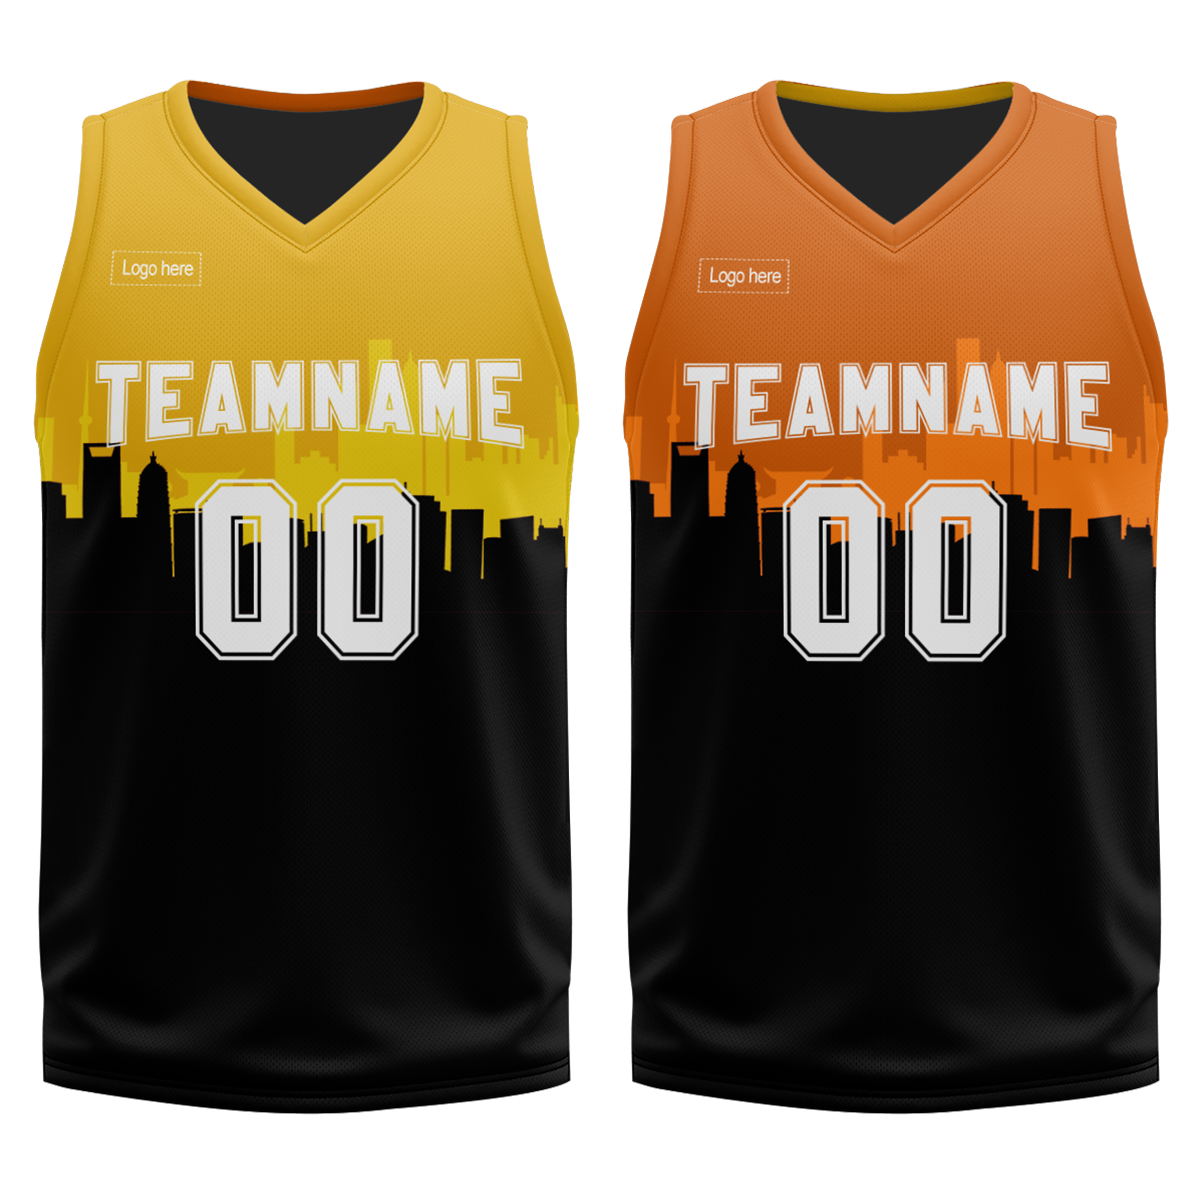 custom-basketball-jerseys-uniforms-print-team-name-number-youth-jersey-set-shirt-shorts-university-game-sports-suit-clothes-at-cj-pod-4